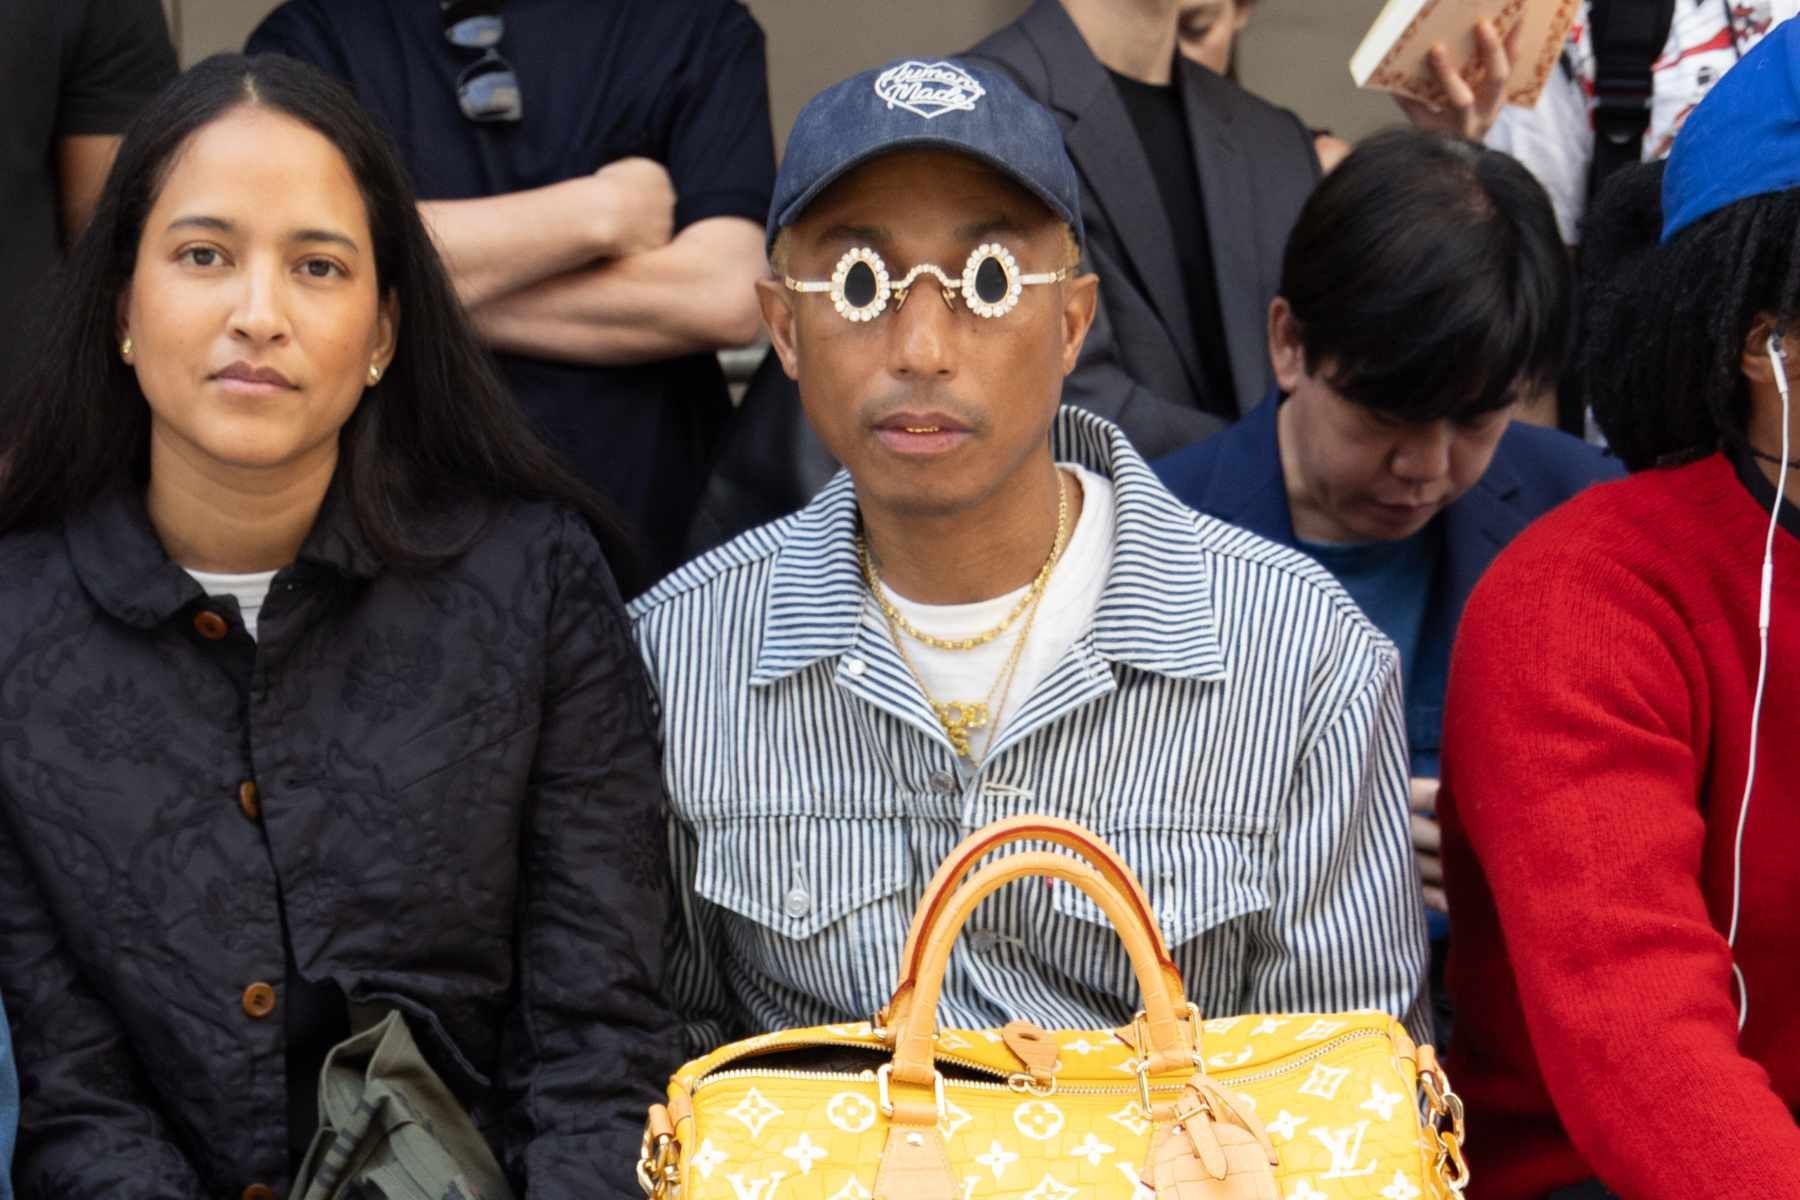 This is the million-euro Louis Vuitton bag worn by Pharrell in Paris -  HIGHXTAR.